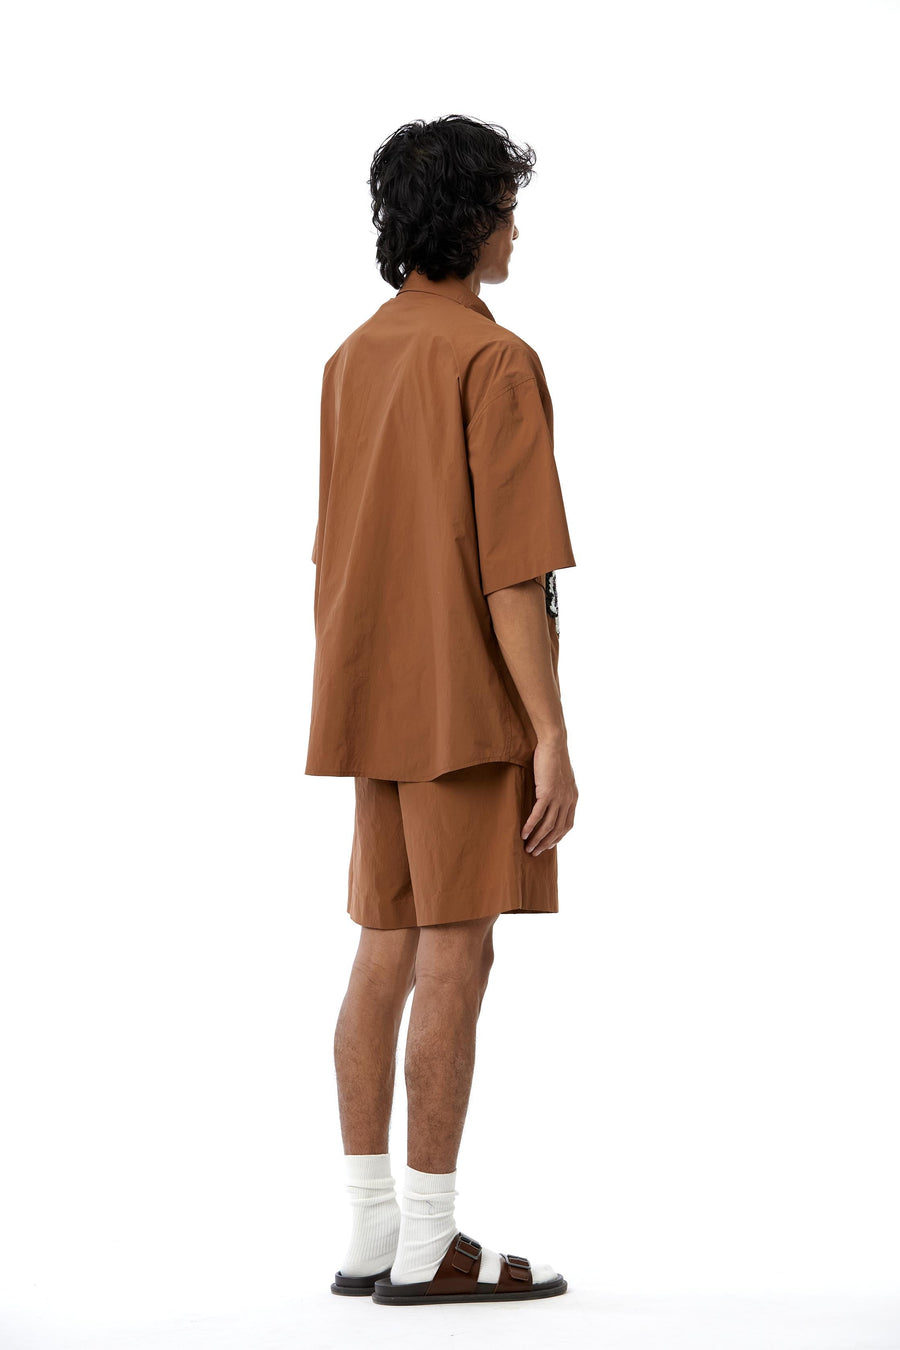 Full sleeves Pixel flower scattter shirt matching shorts - Kanika Goyal Label